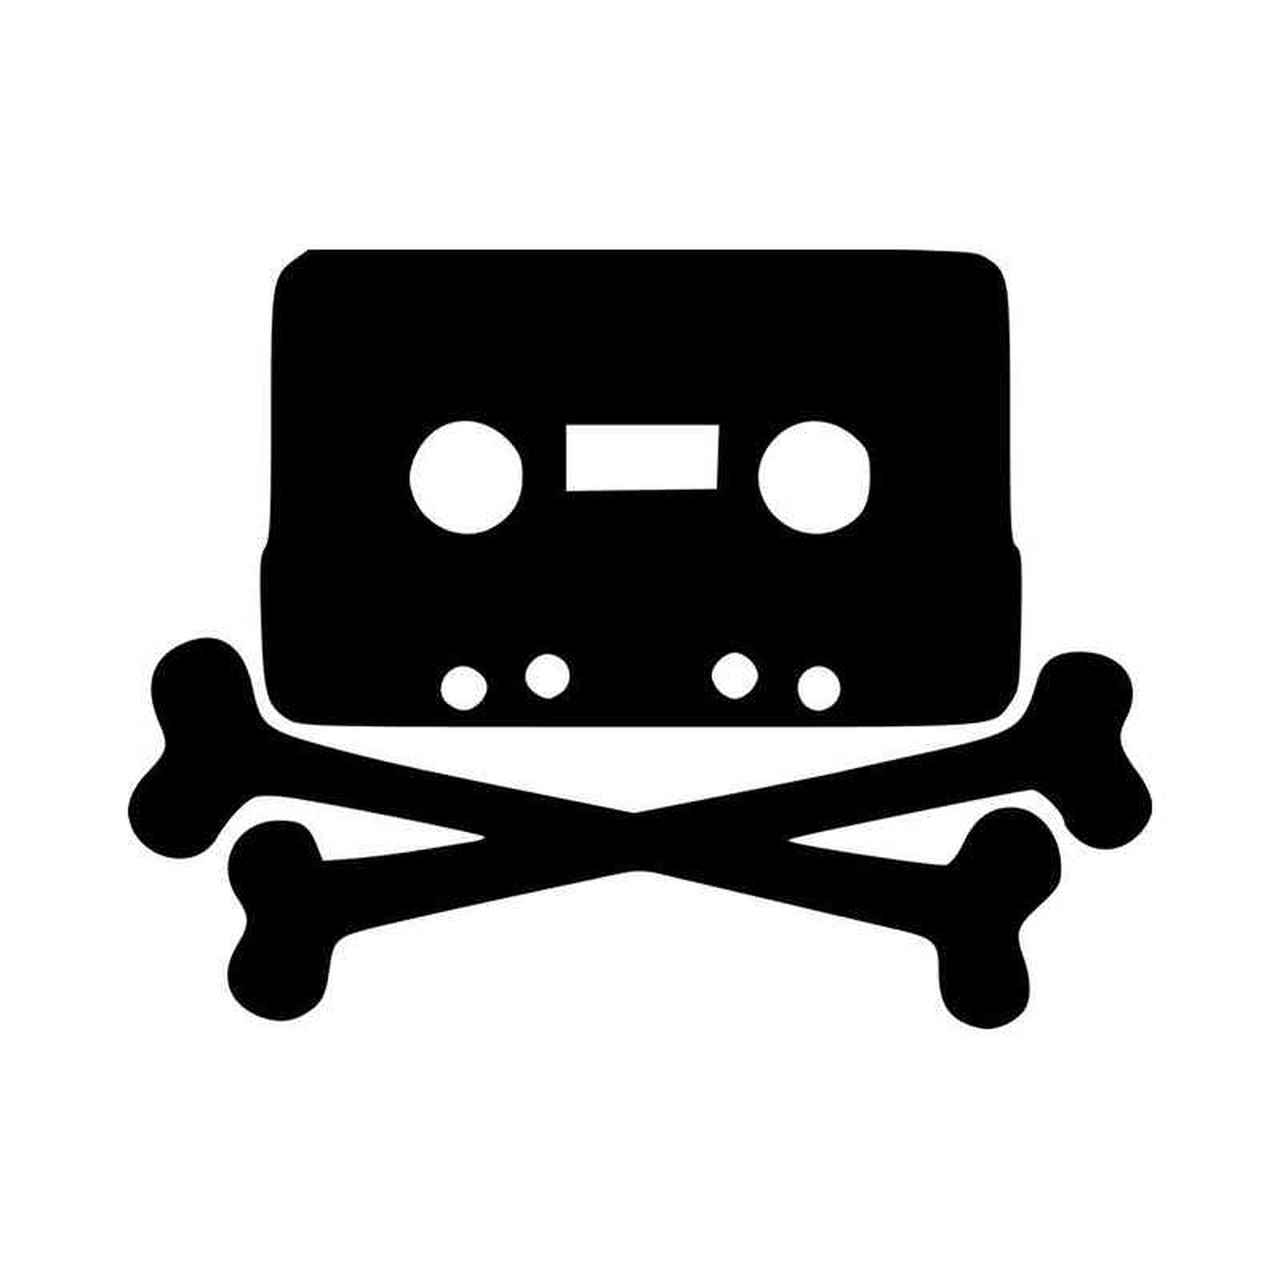 Cassette Logo - The Pirate Bay Cassette Logo Vinyl Decal Sticker